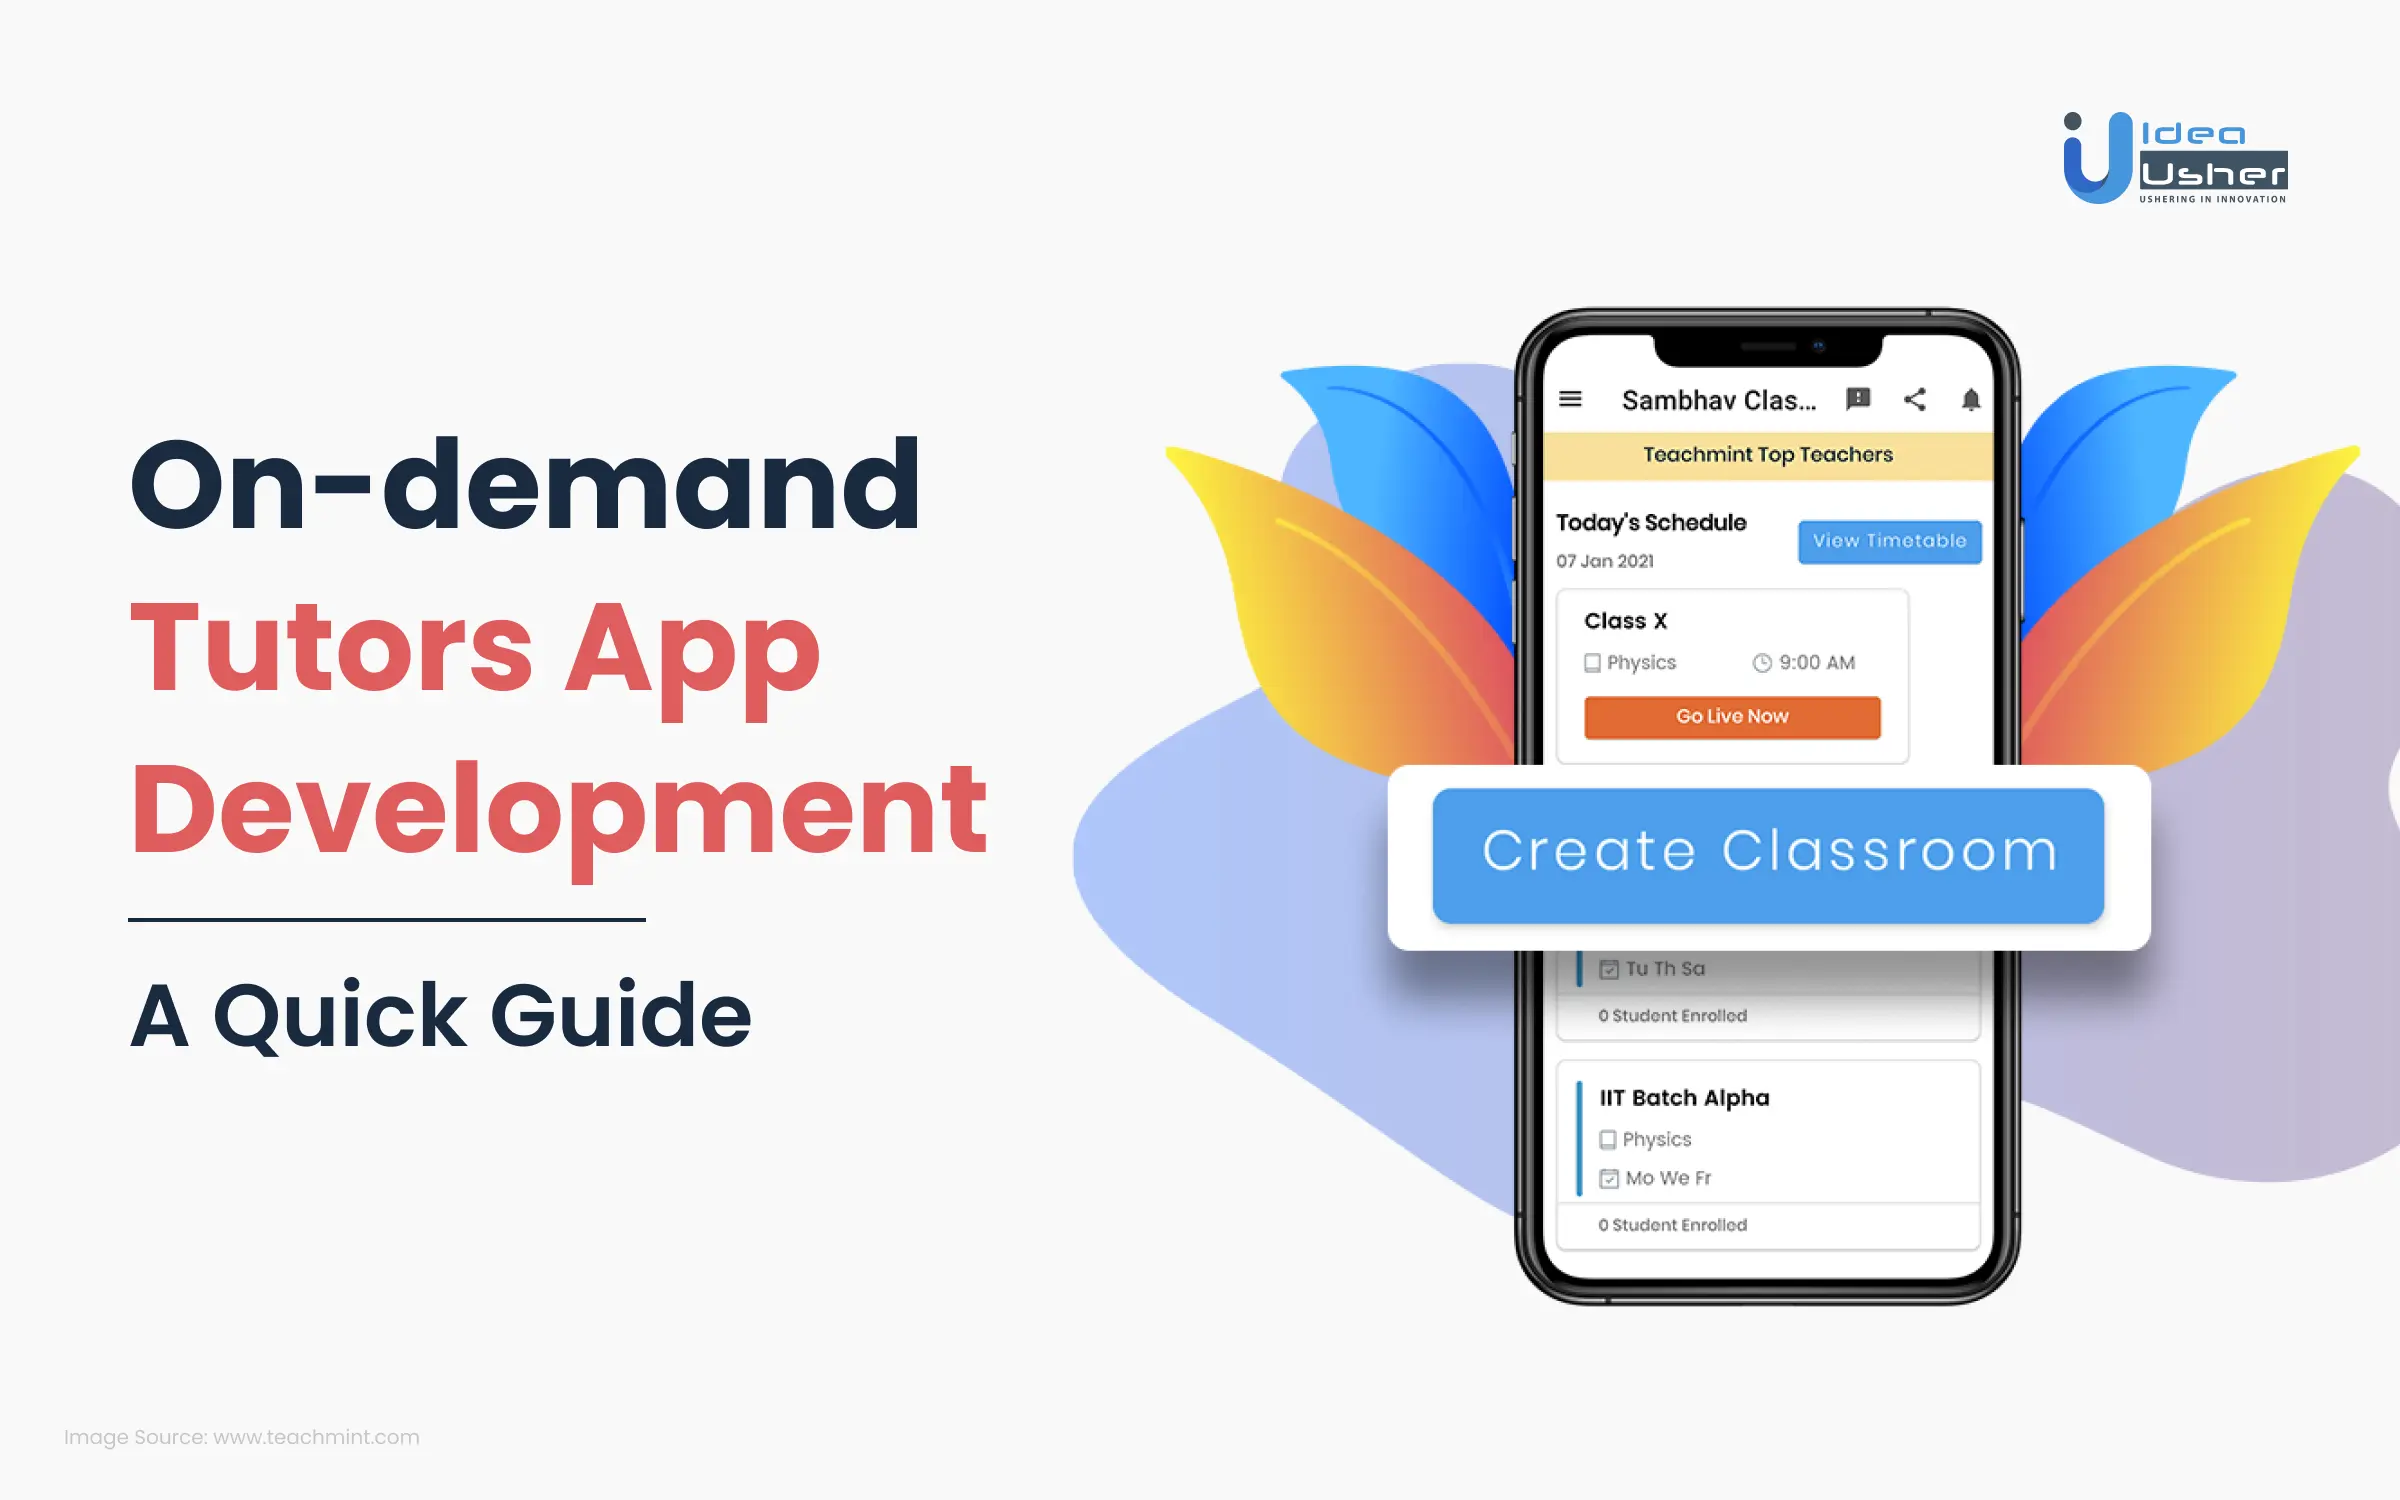 On-demand Tutors App Development-A Quick Guide